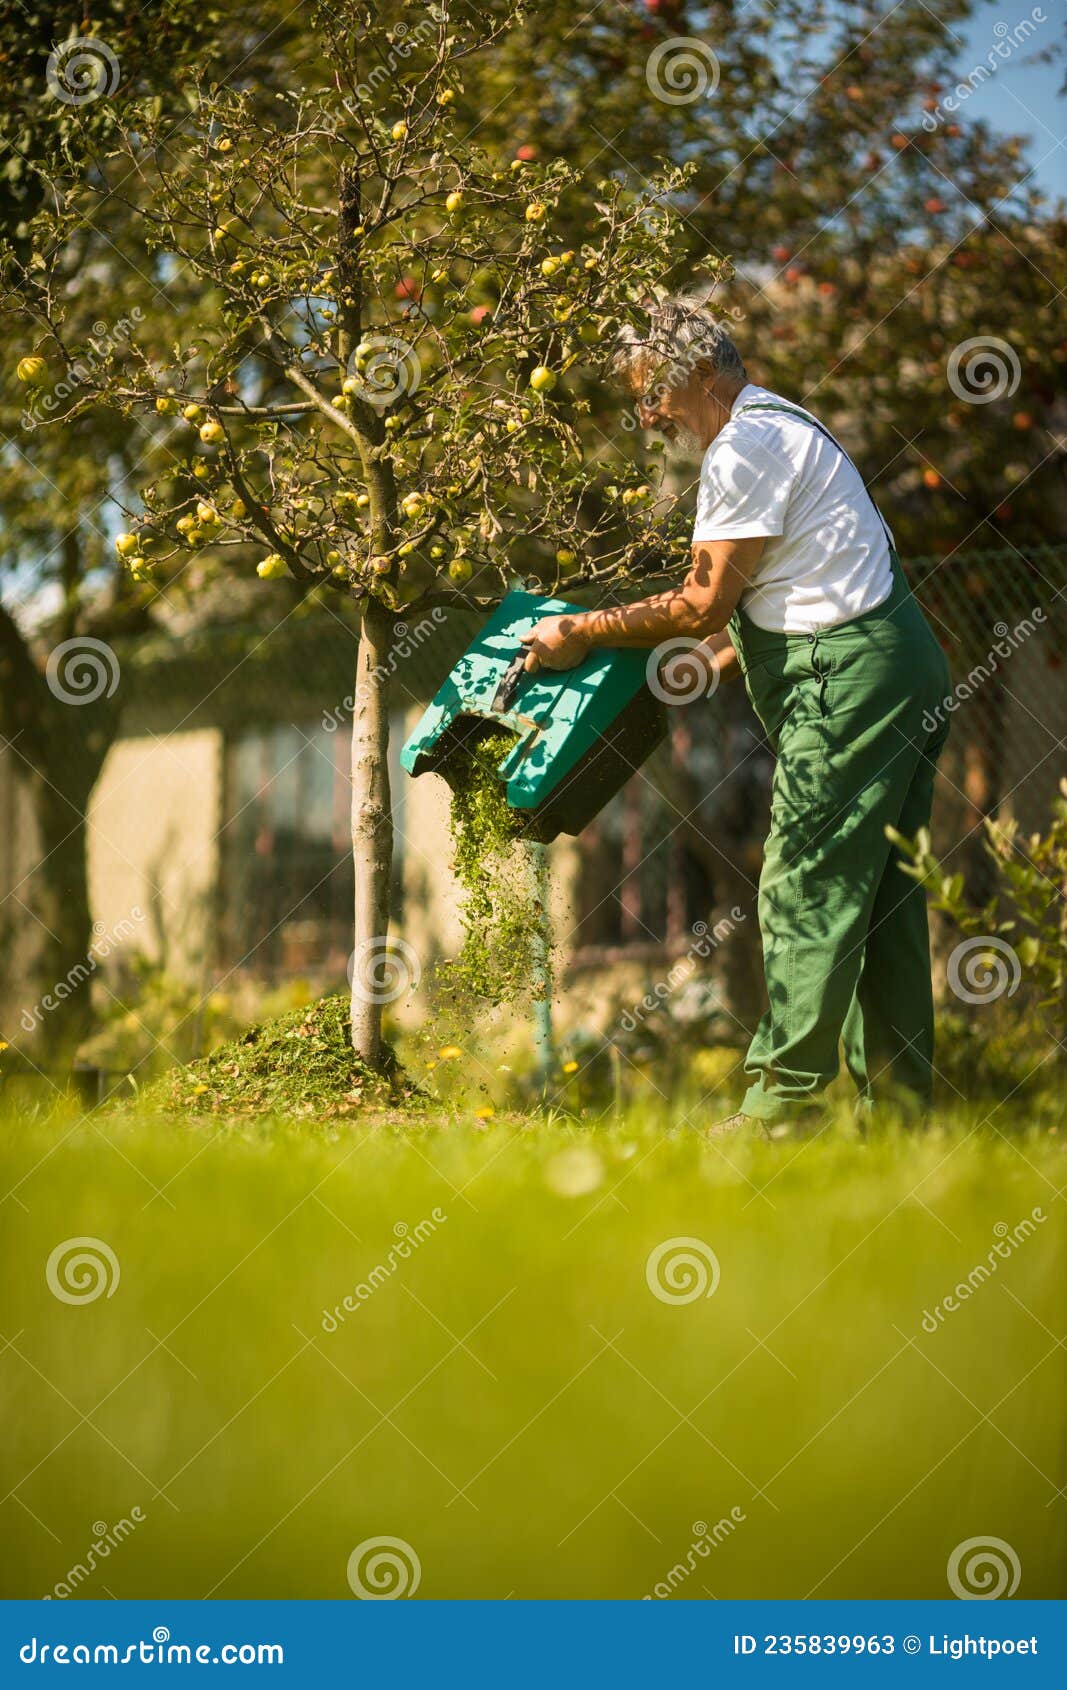 Senior Gardener Gardening in His Garden Stock Image - Image of ...